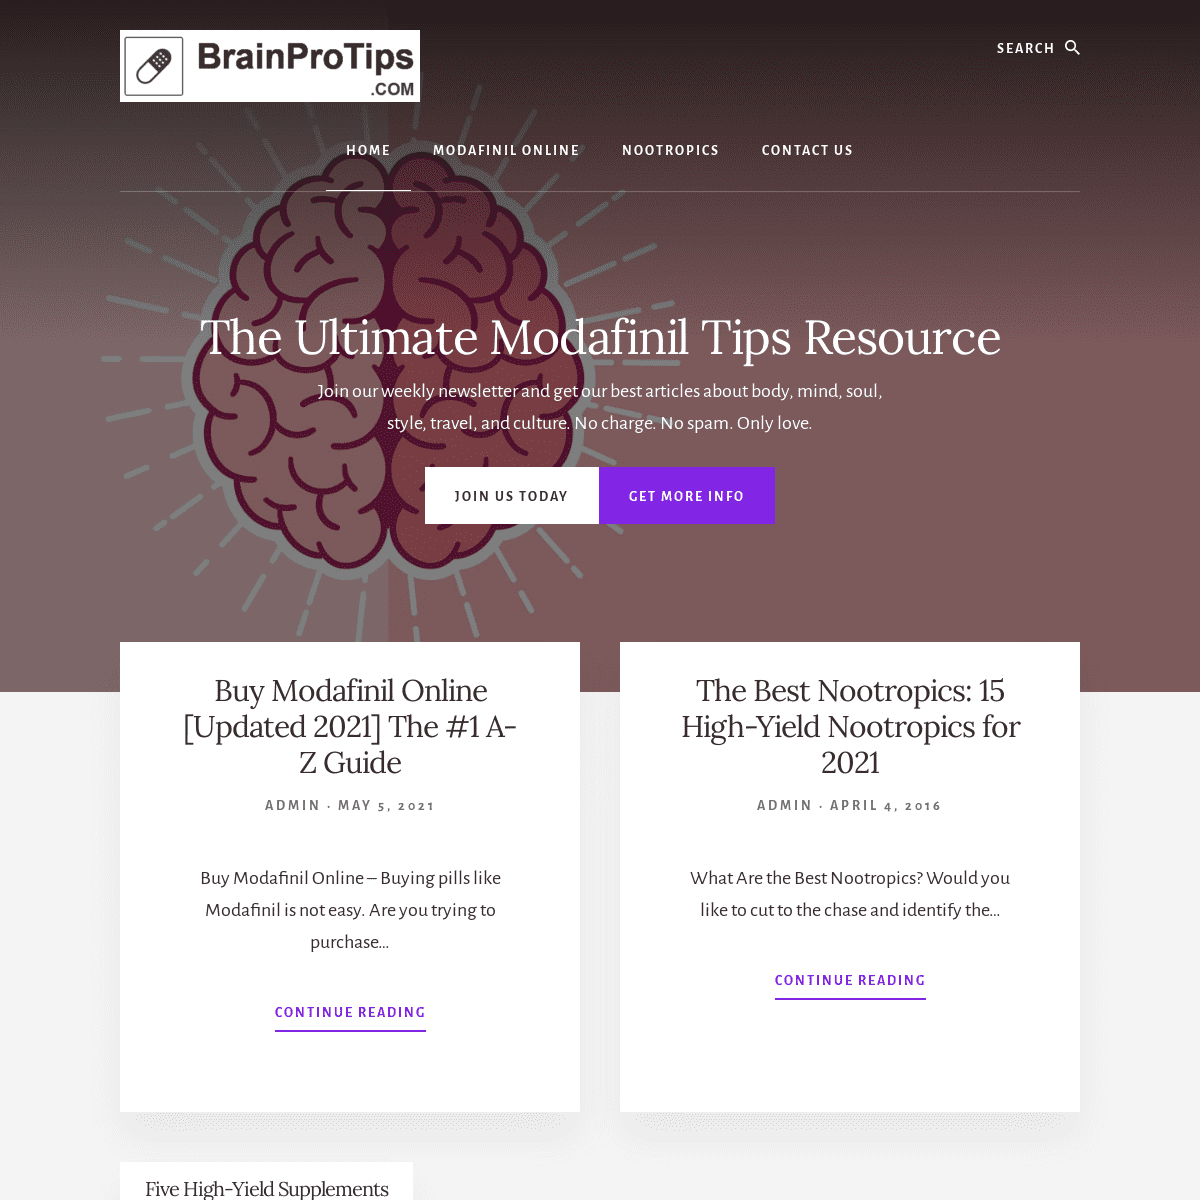 A complete backup of https://brainprotips.com